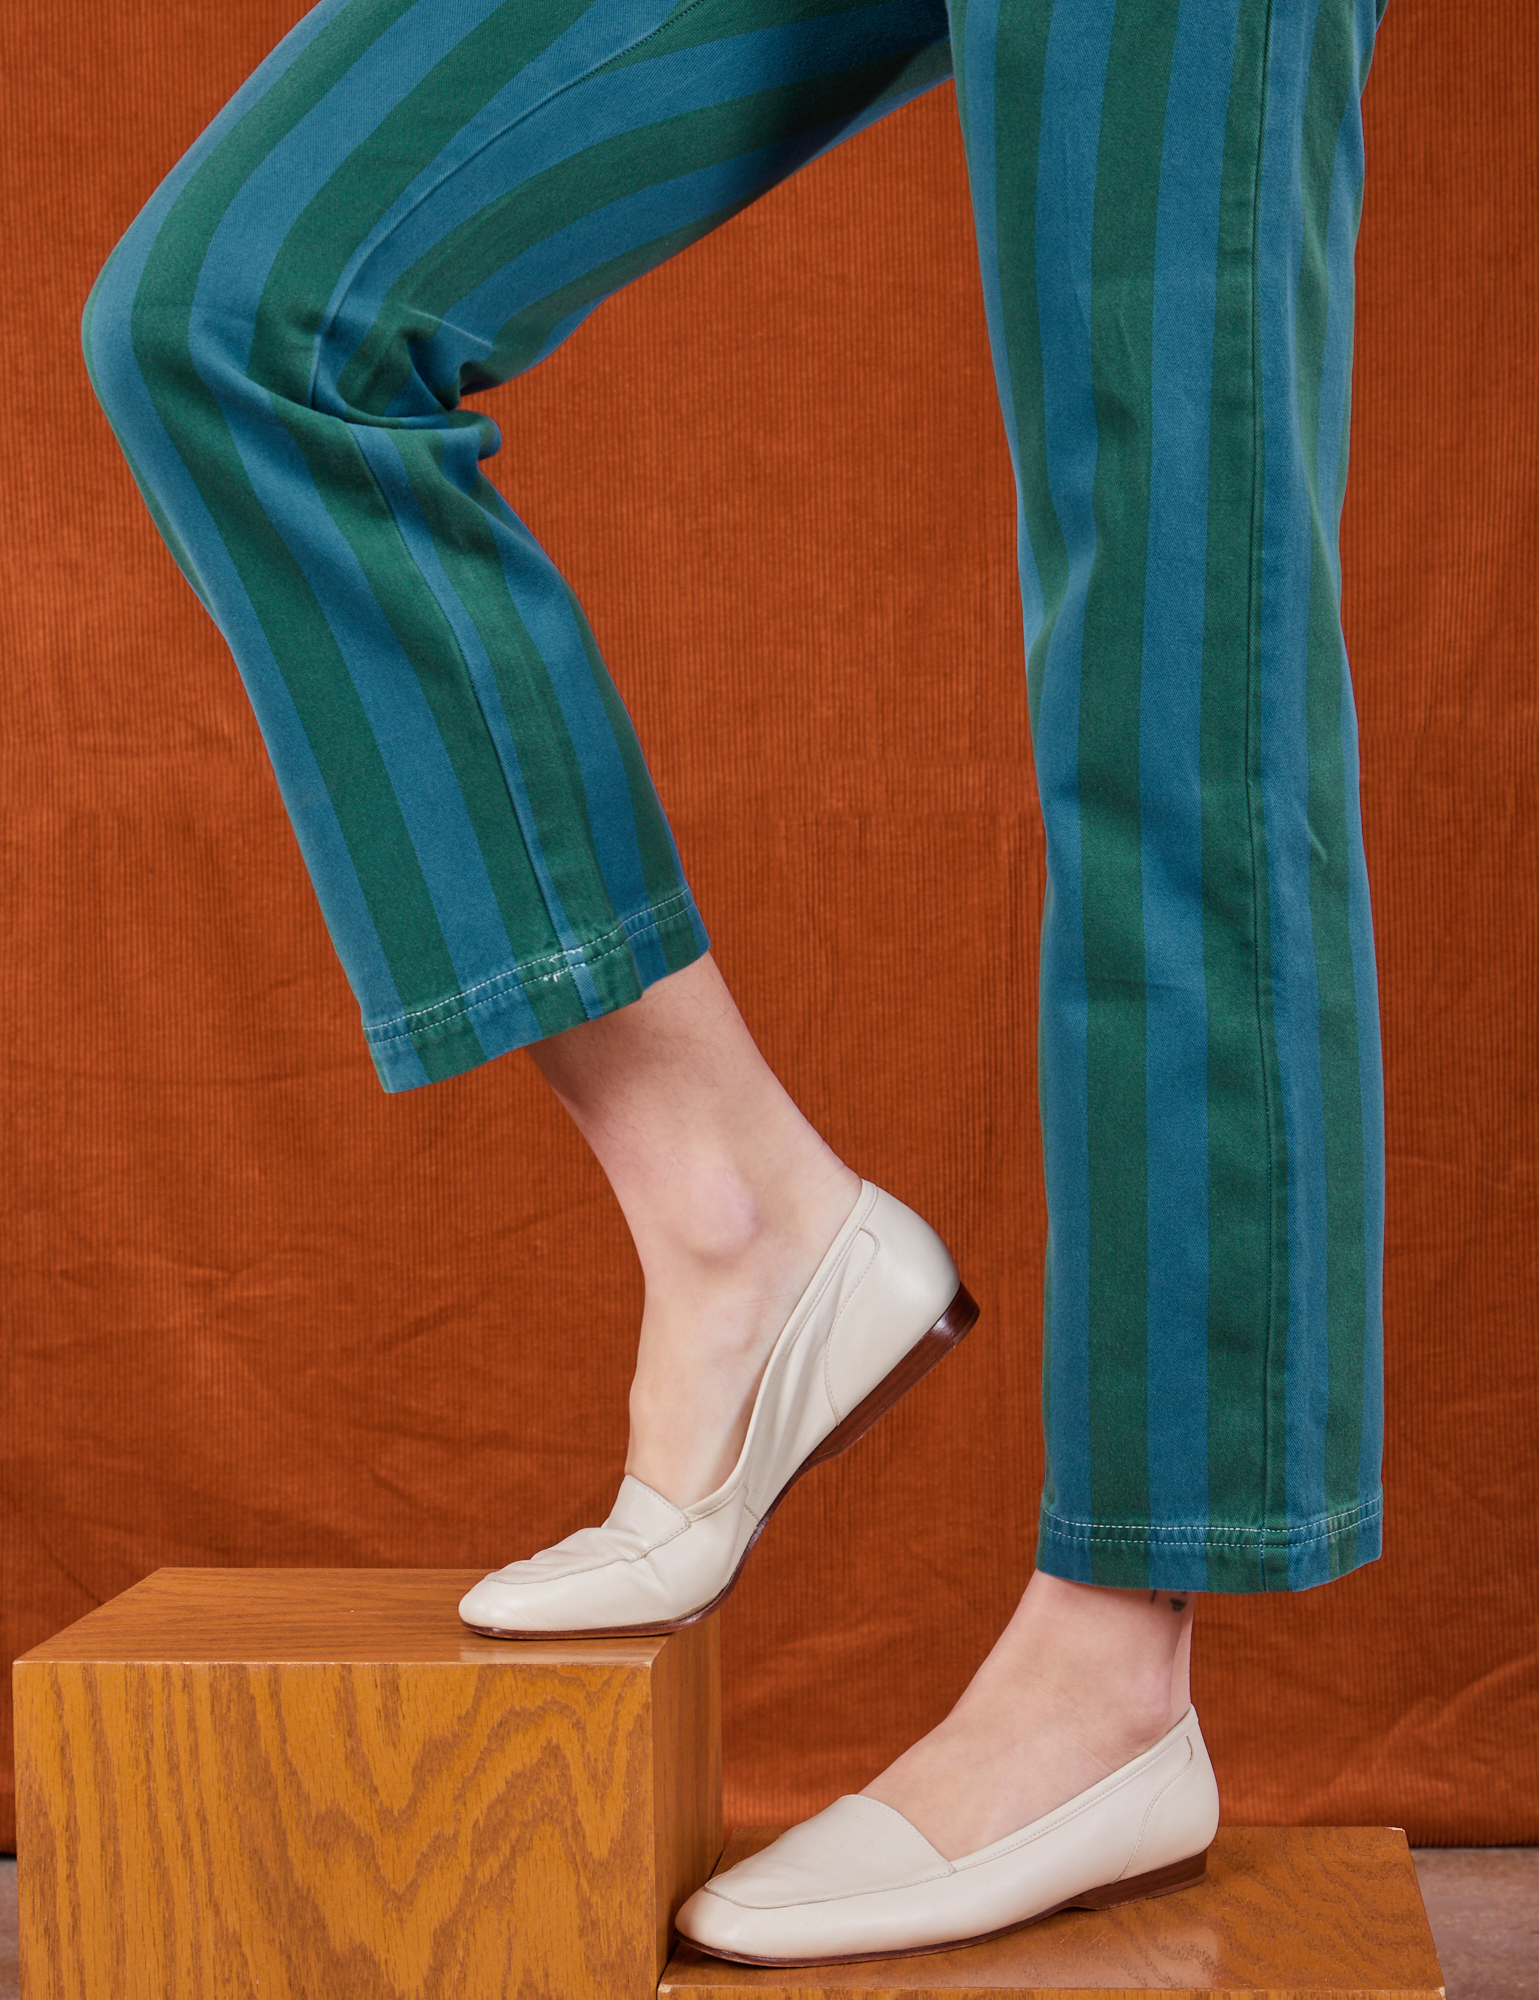 Overdye Stripe Work Pants in Blue/Green pant leg side view close up on Alex